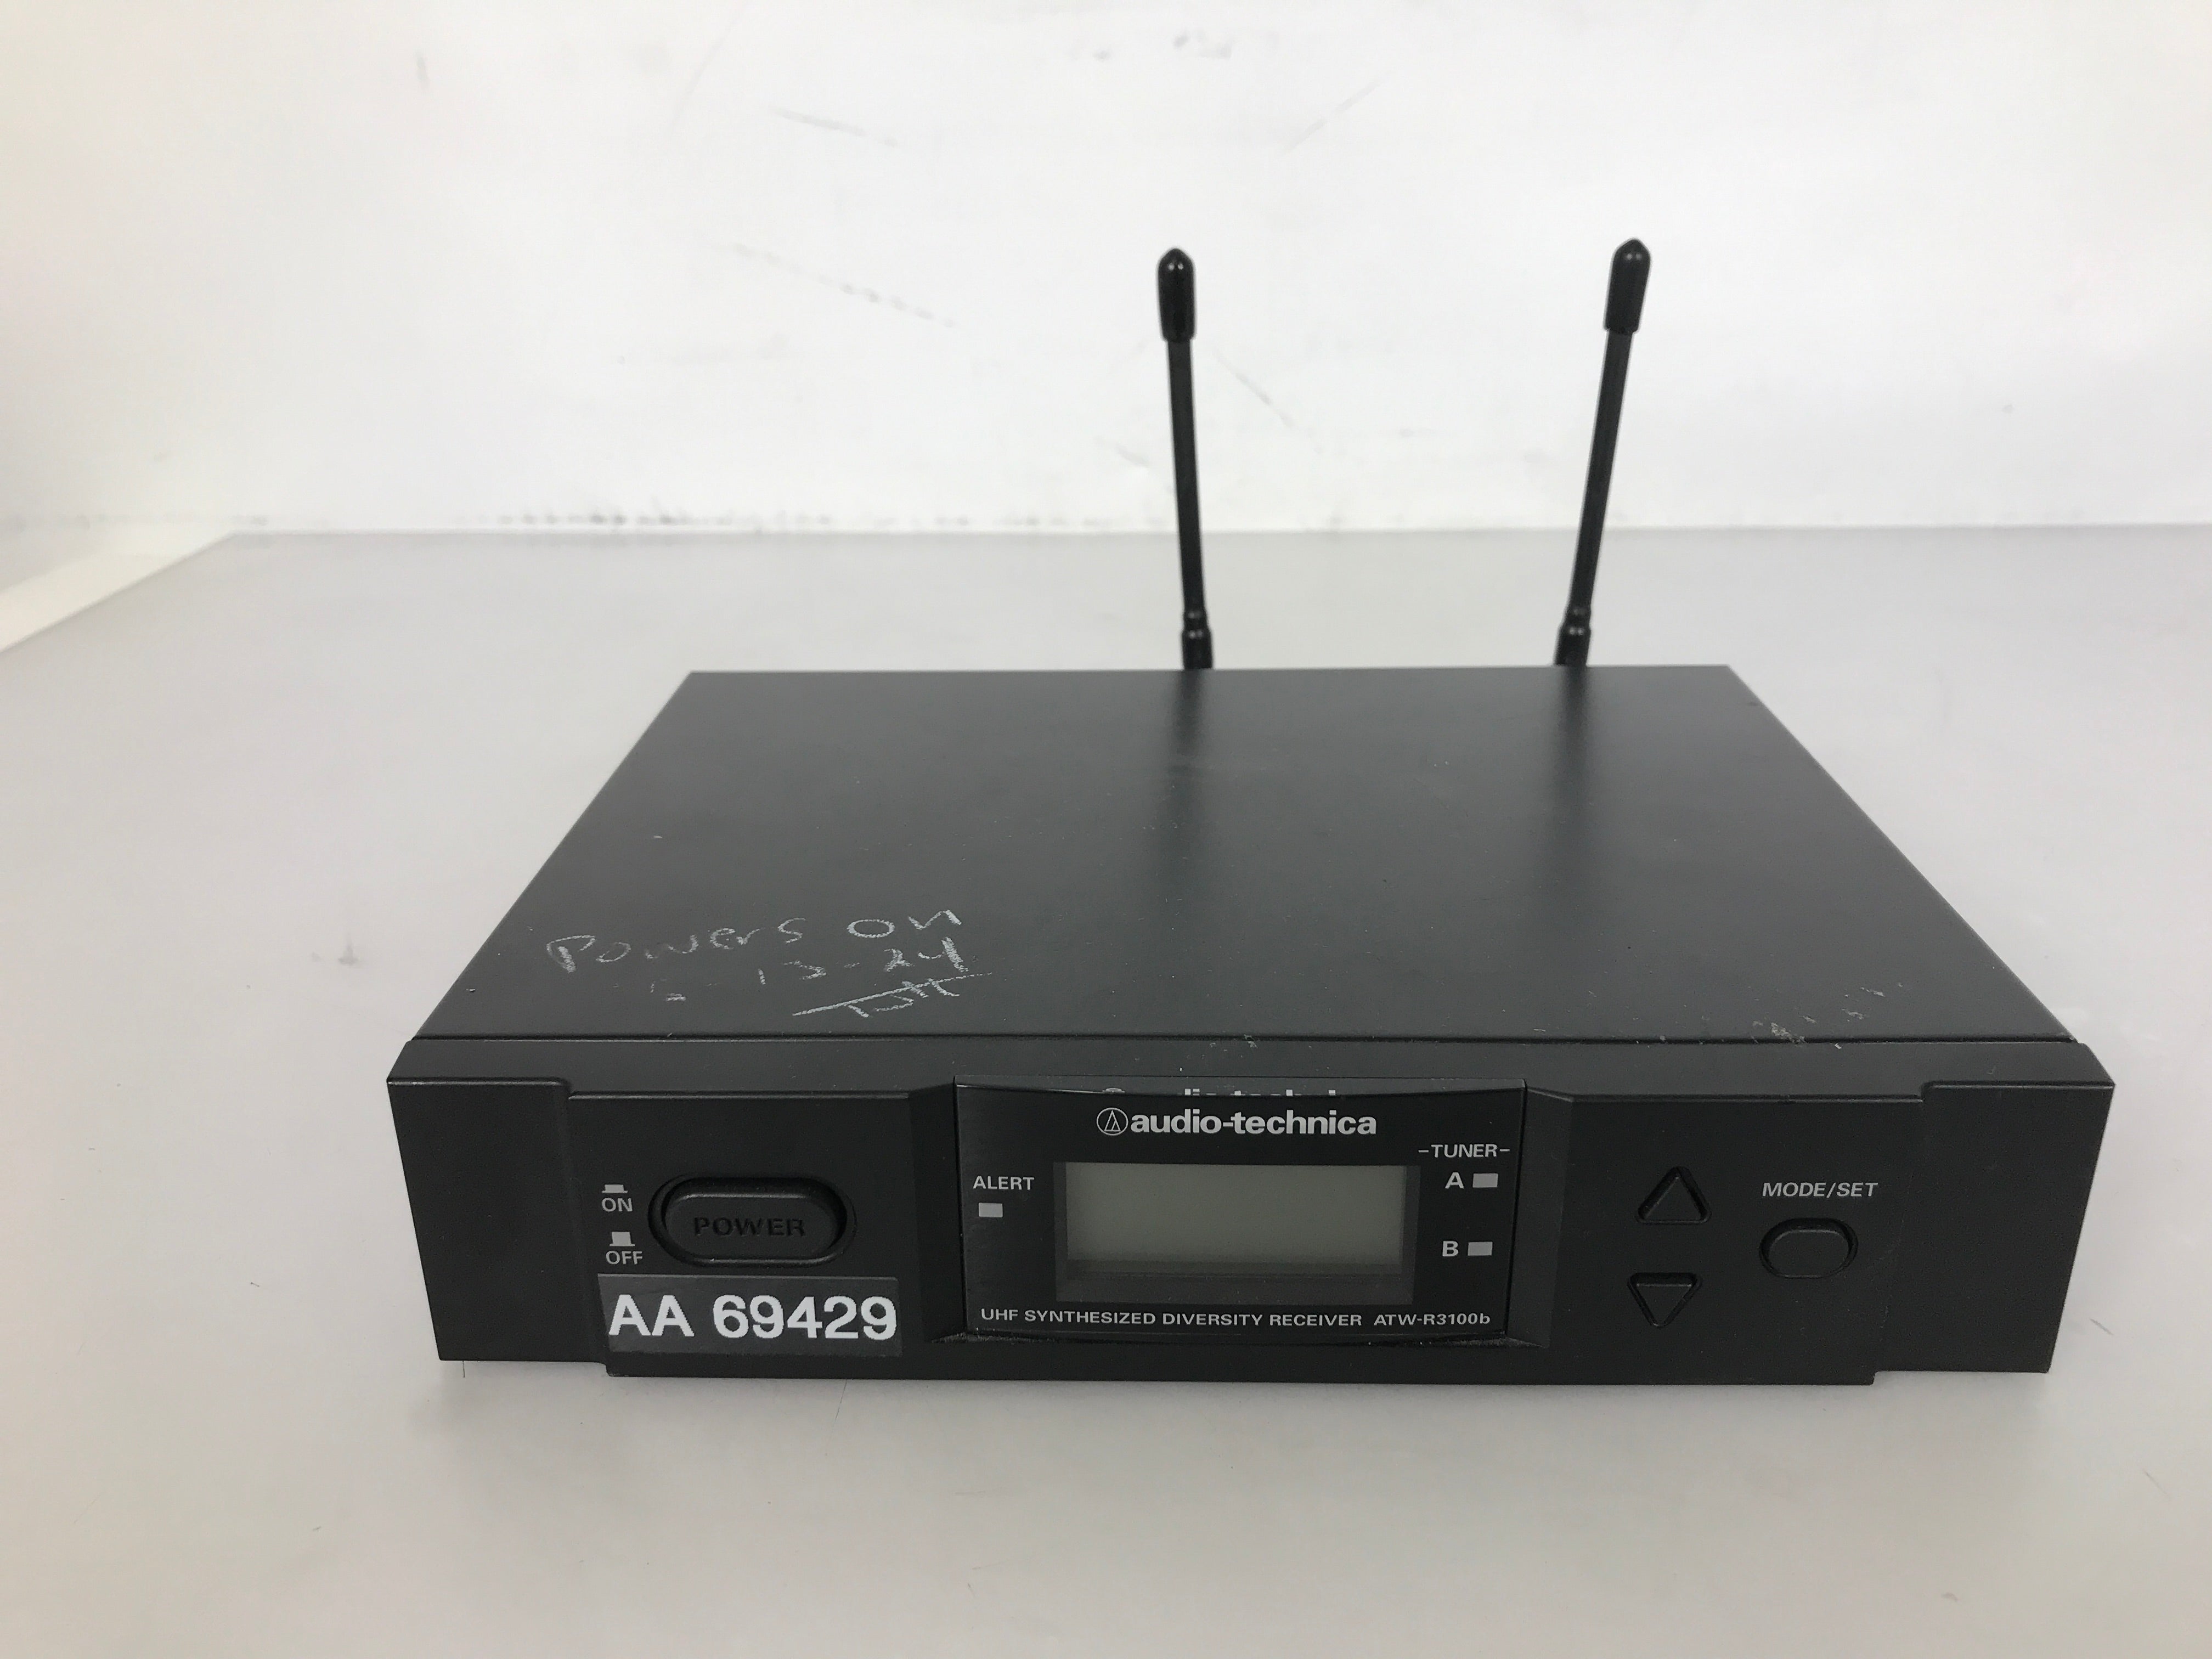 Audio-Technica ATW-R3100B UHF Synthesized Diversity Receiver